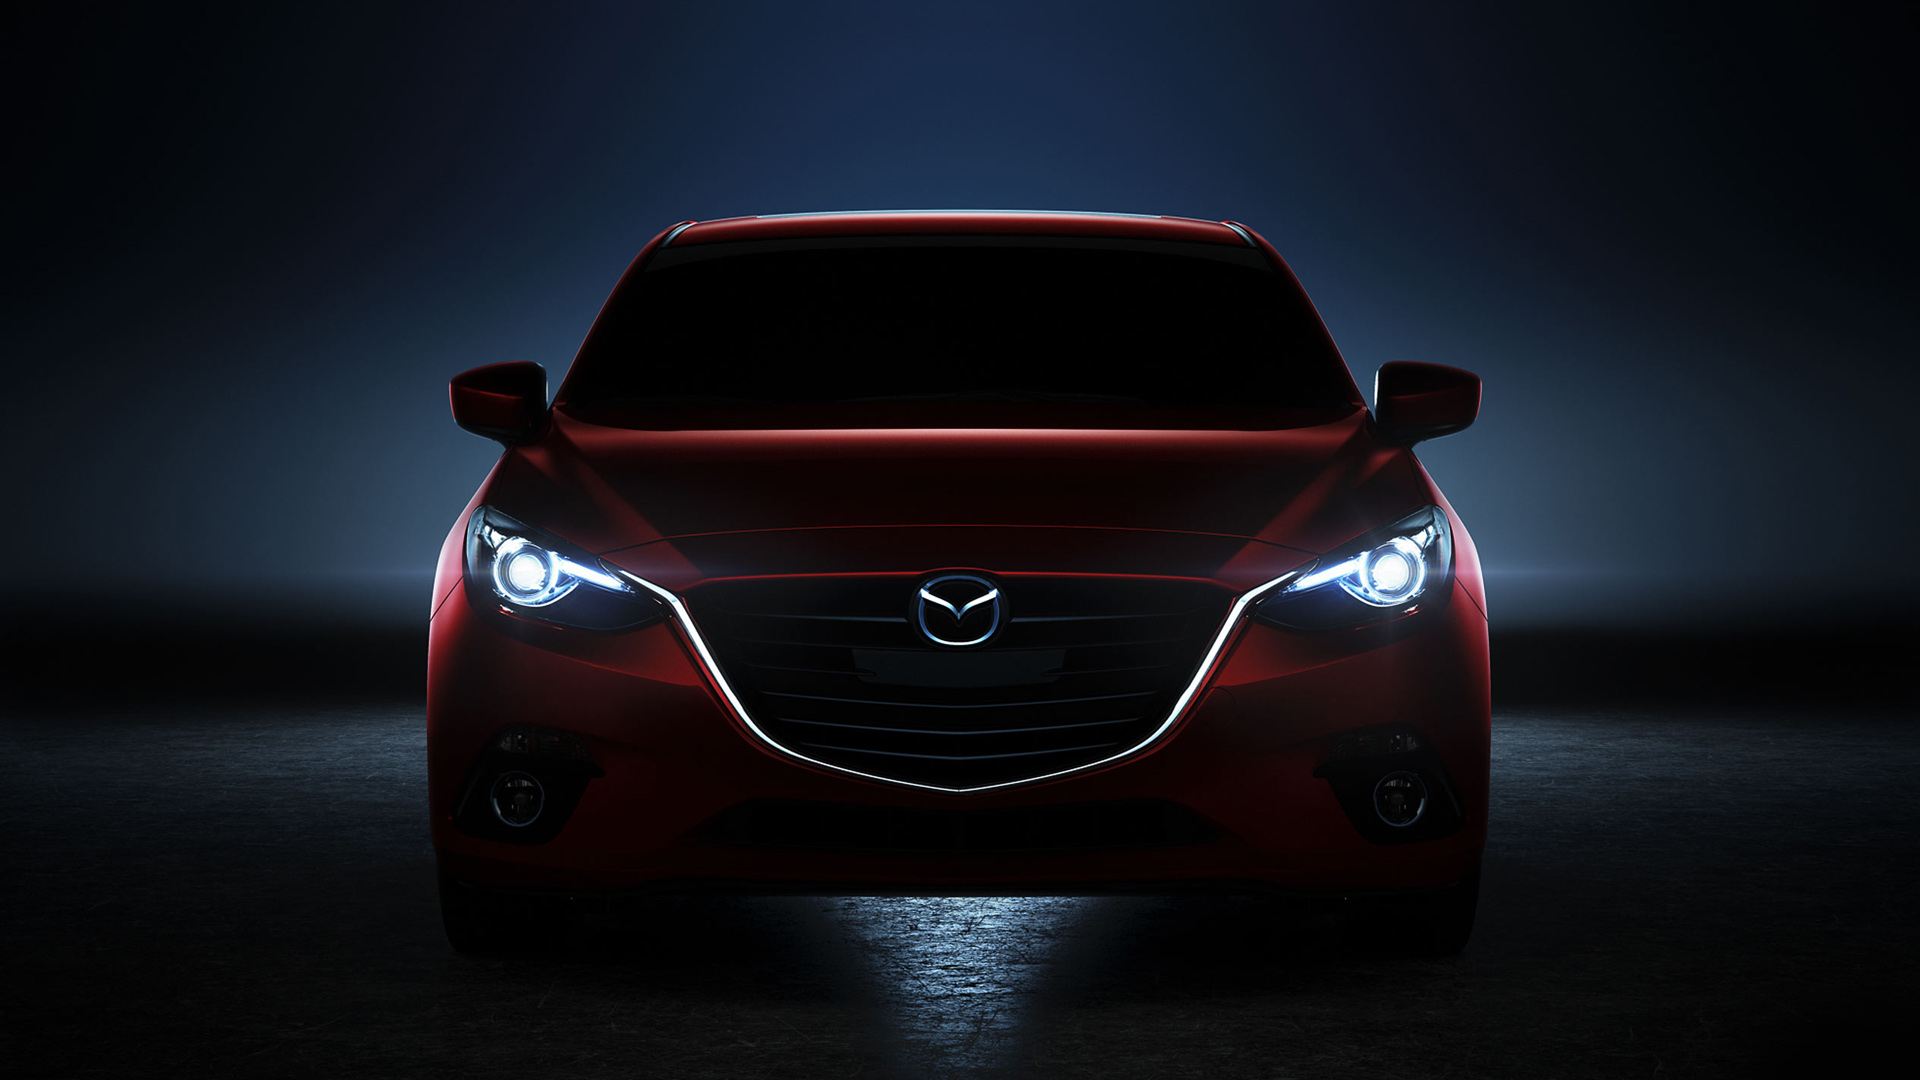 2014 Mazda 3 Wallpaper | HD Car Wallpapers | ID #3503